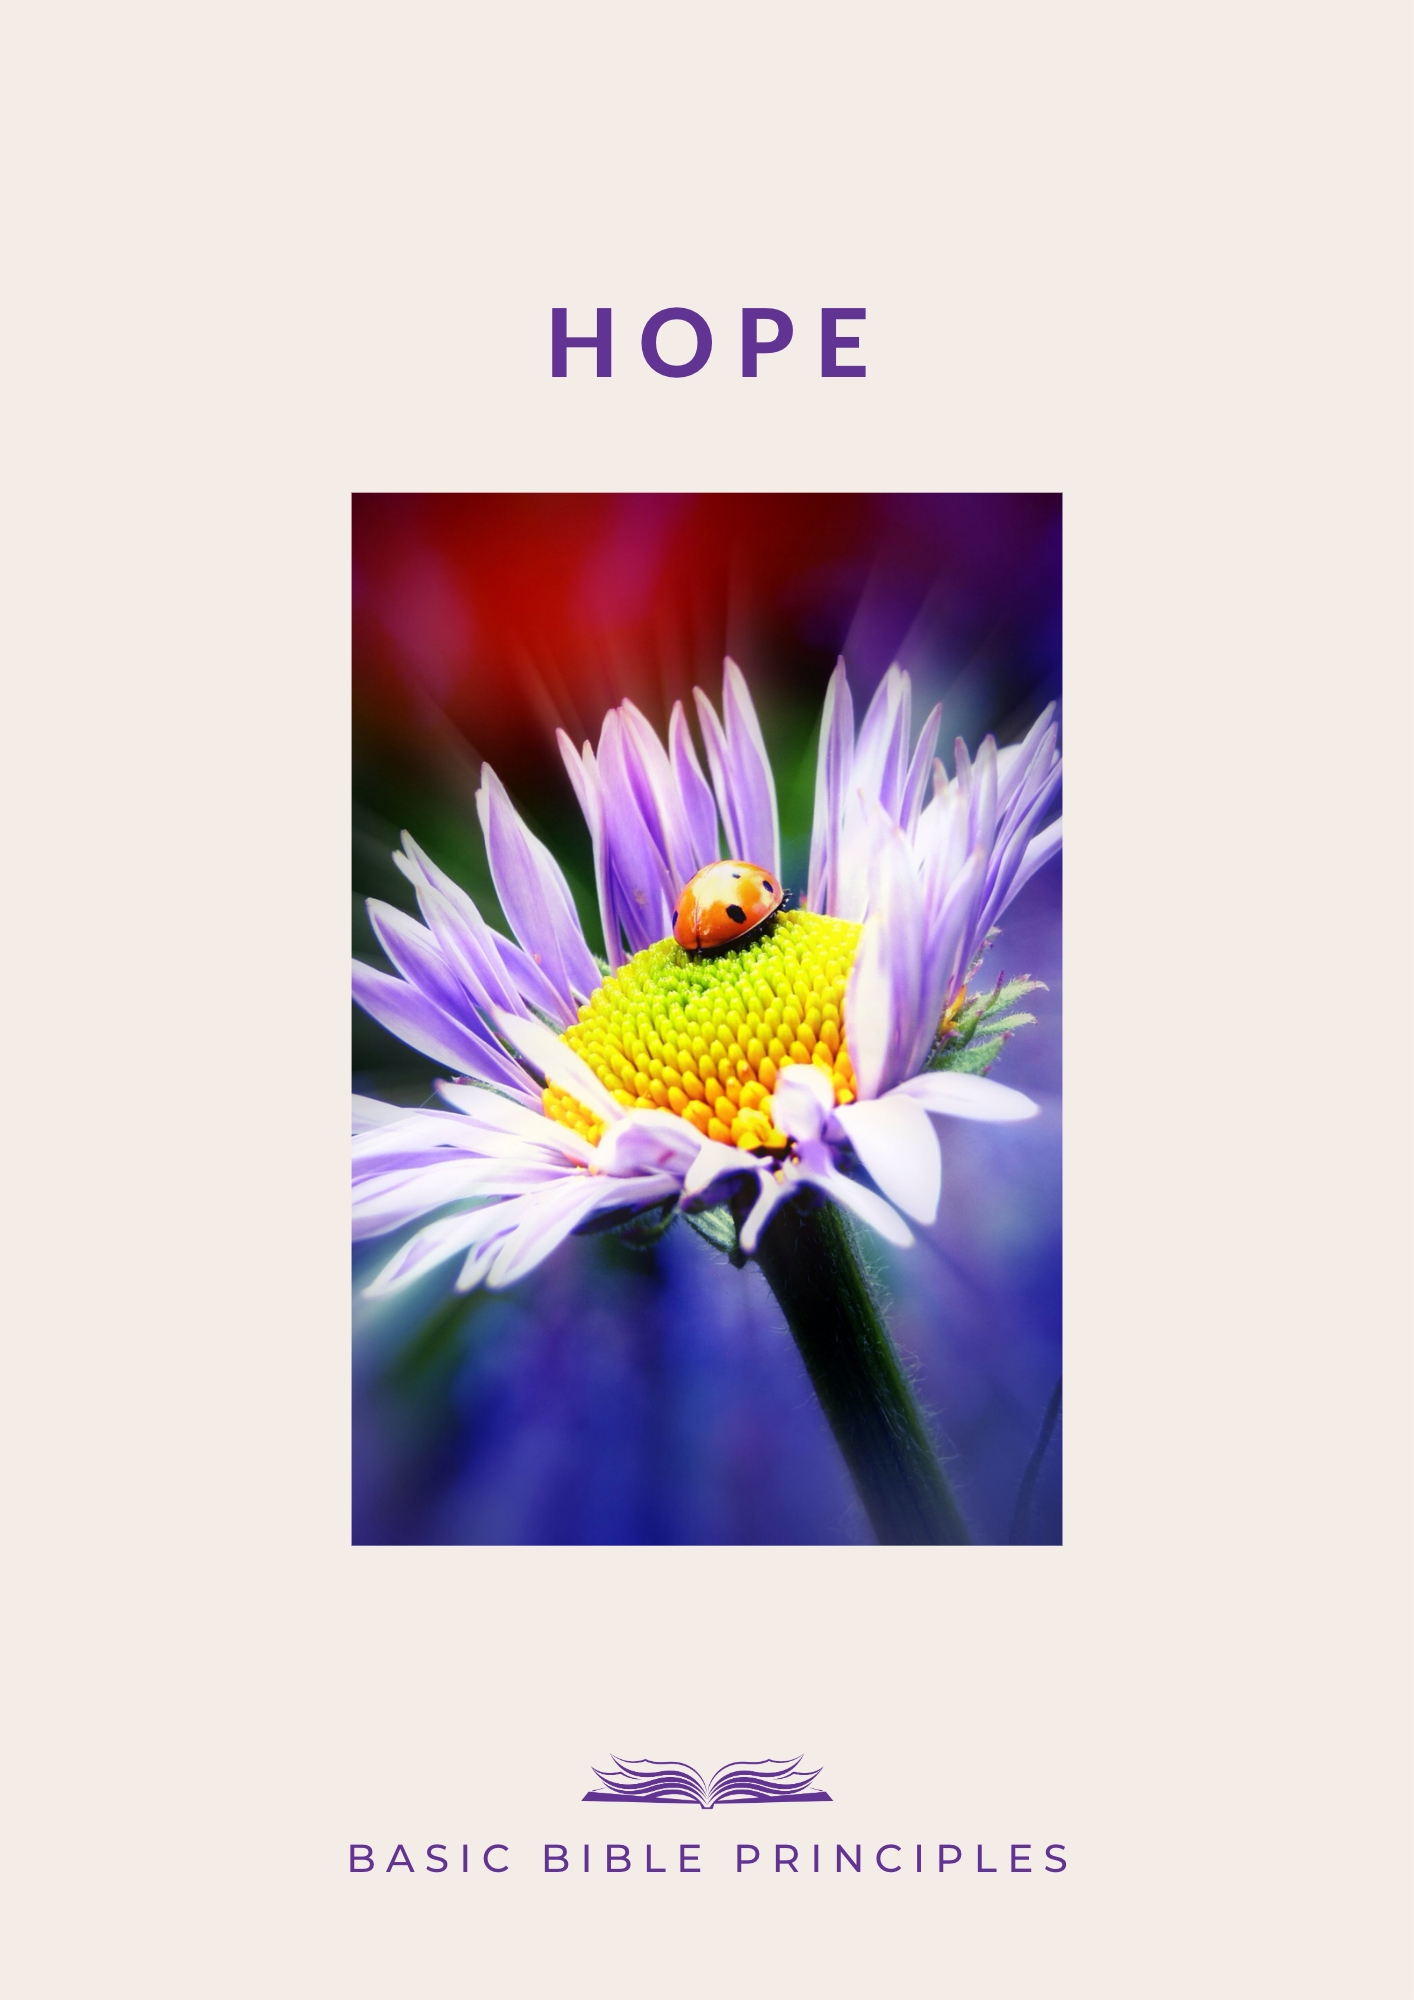 Basic Bible Principles: HOPE